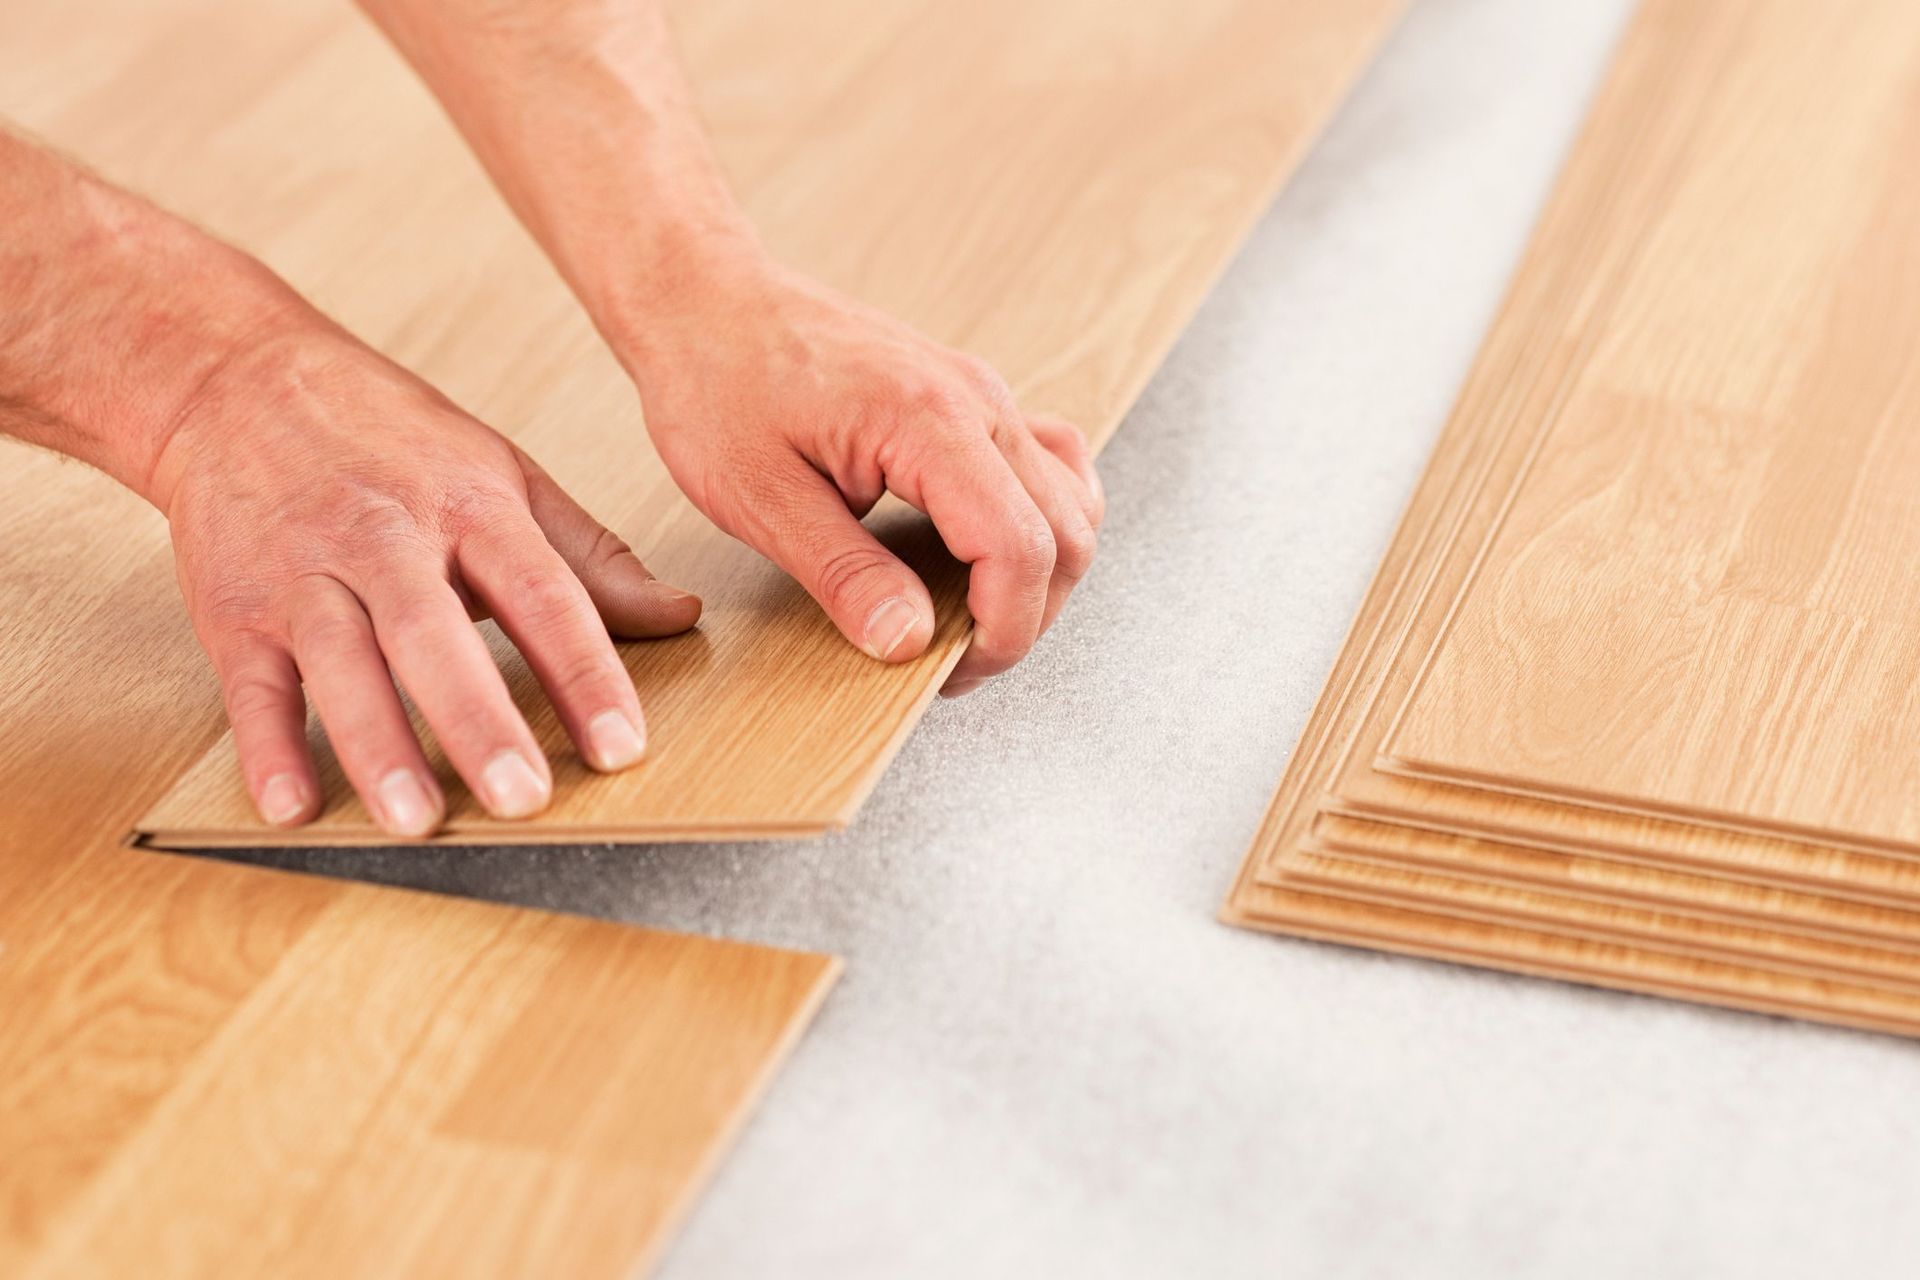 How to Lay Laminate Flooring